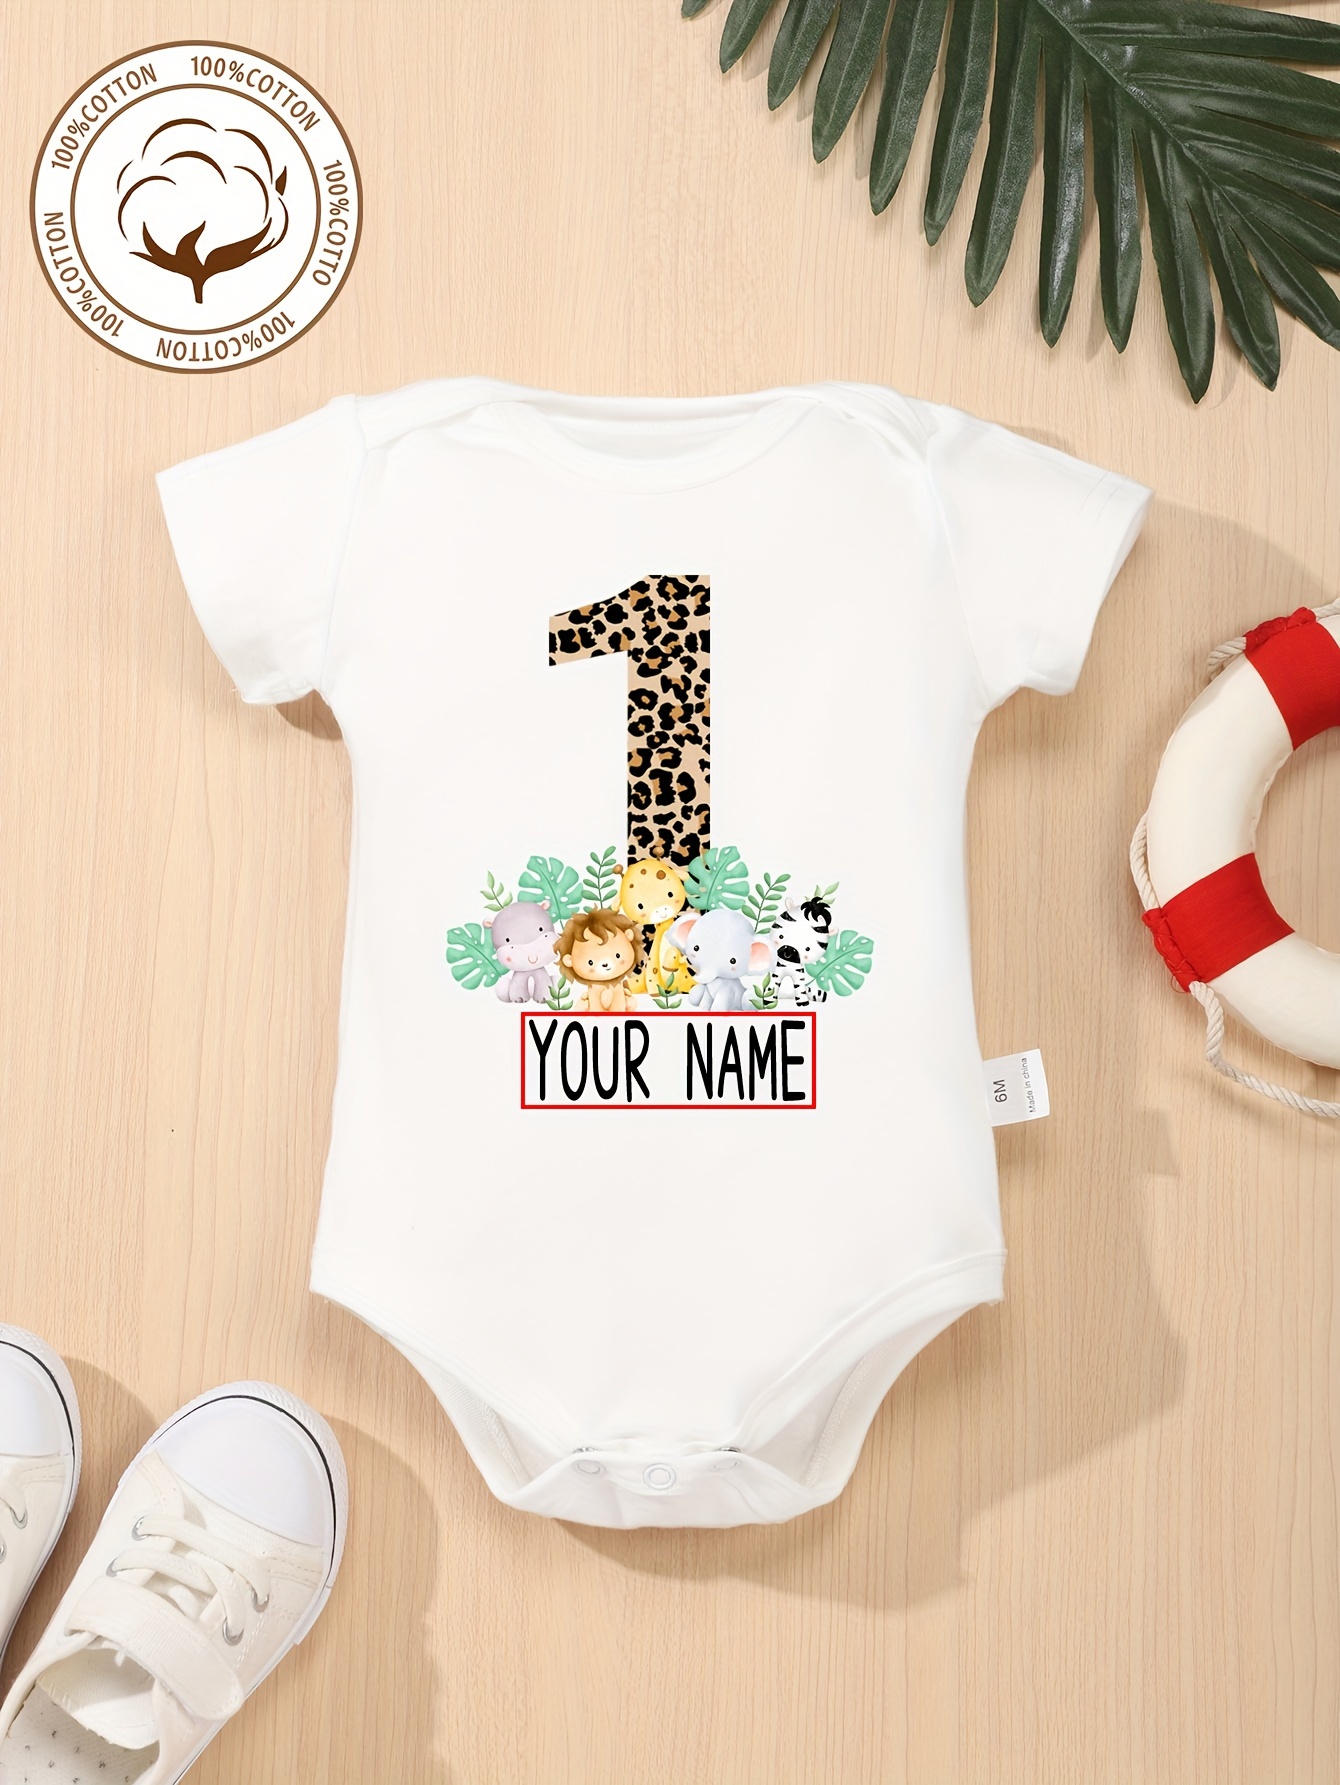 100% Cotton Giraffe and Elephant Print Short-sleeve Baby Romper